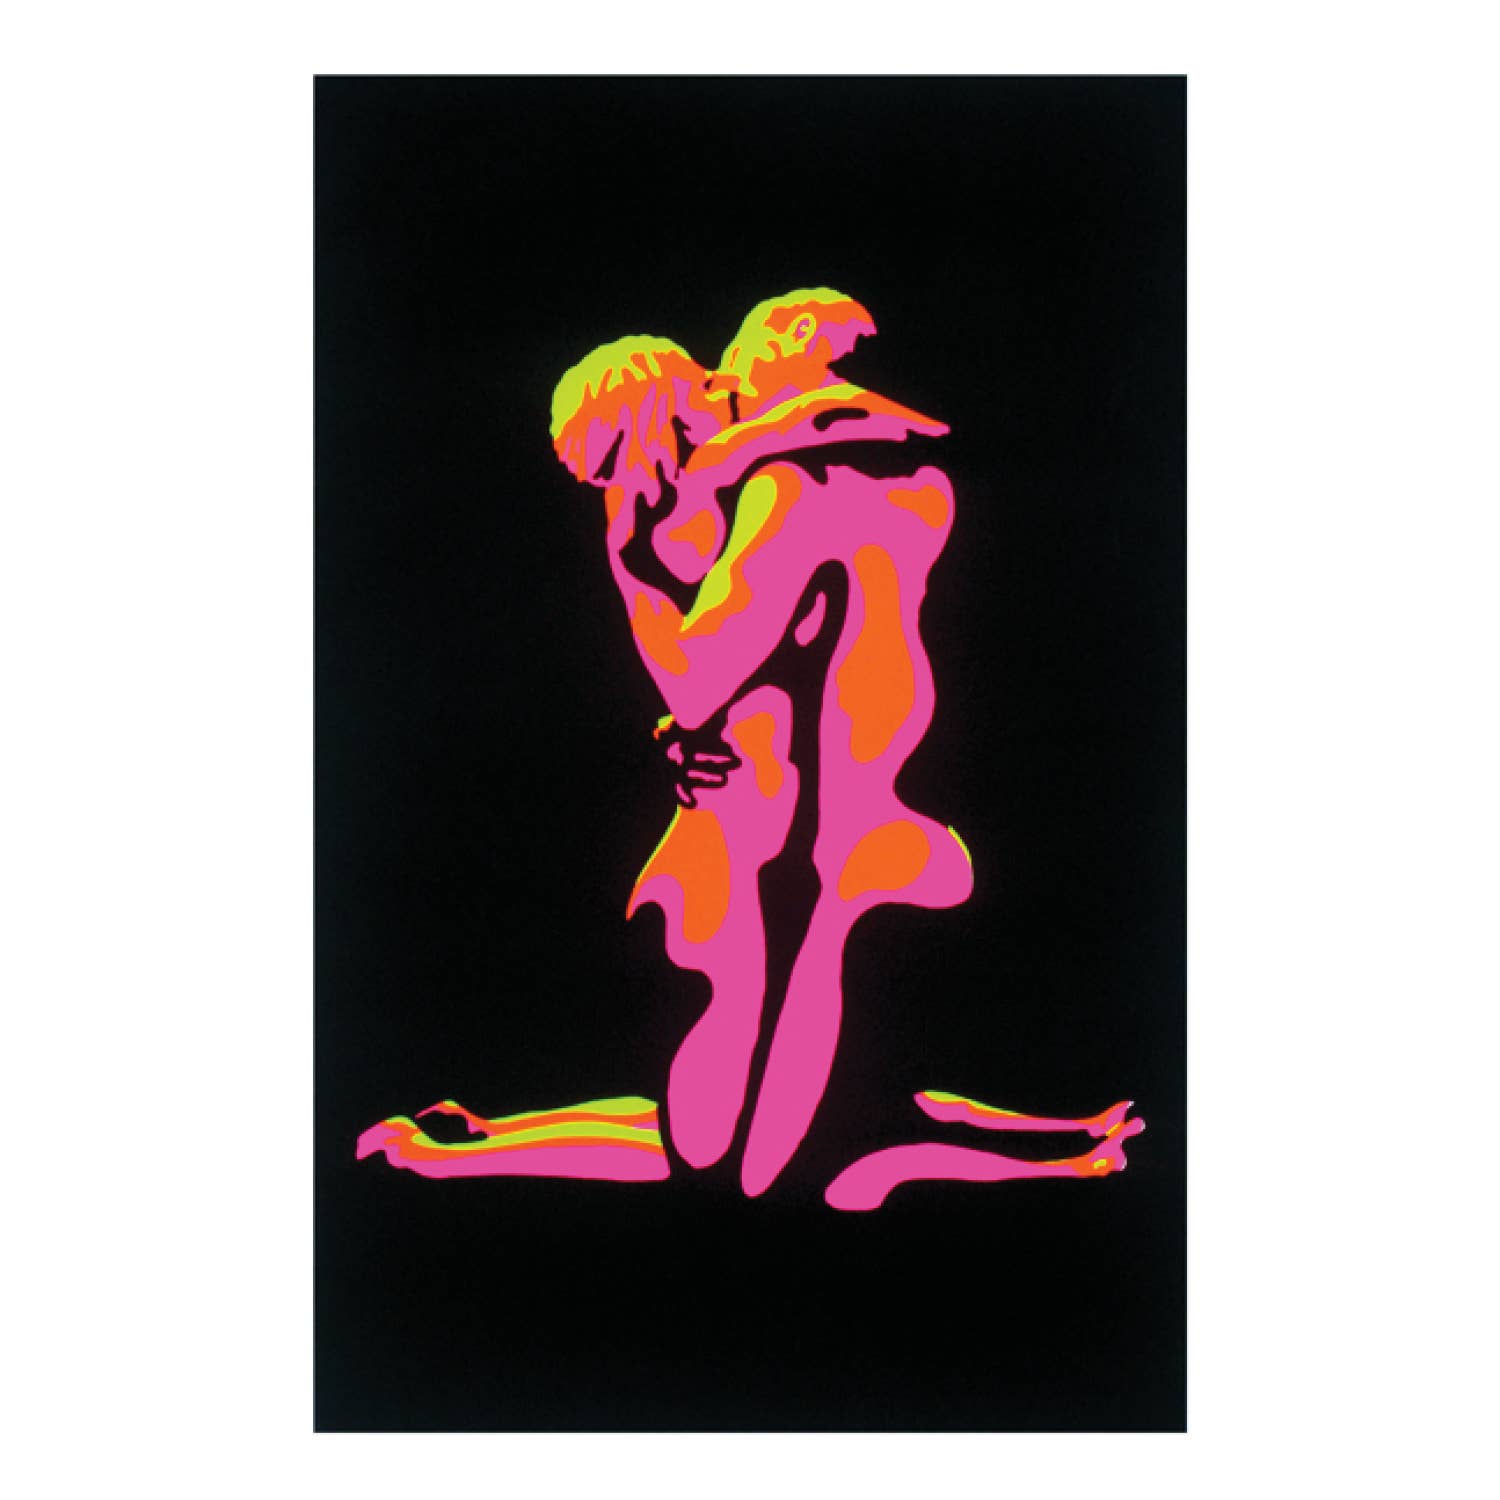 Backlight Flaming Love Wall Decor Art Print Poster 24" x 36"